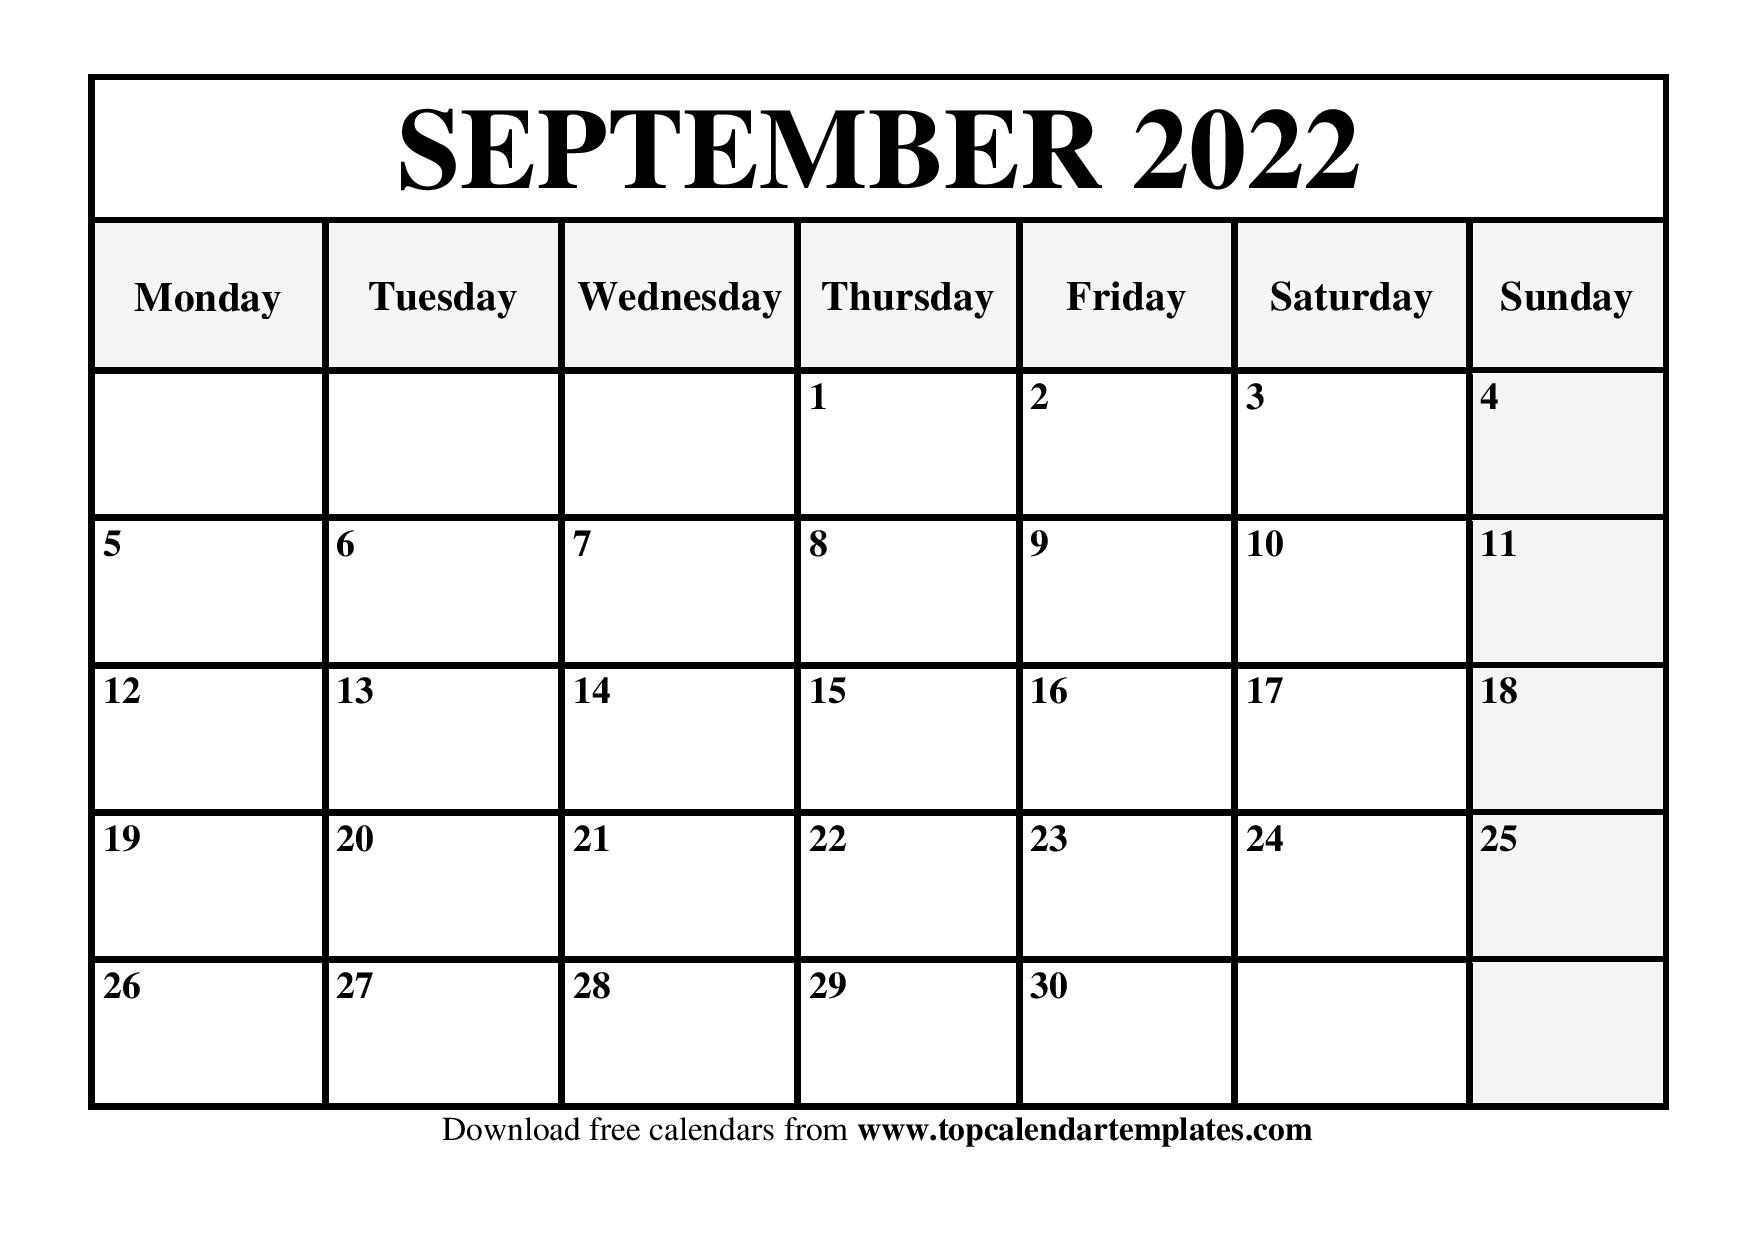 September 2022 Calendar Printable Free Printable Calendar September 2022 Templates - Pdf, Word, Excel